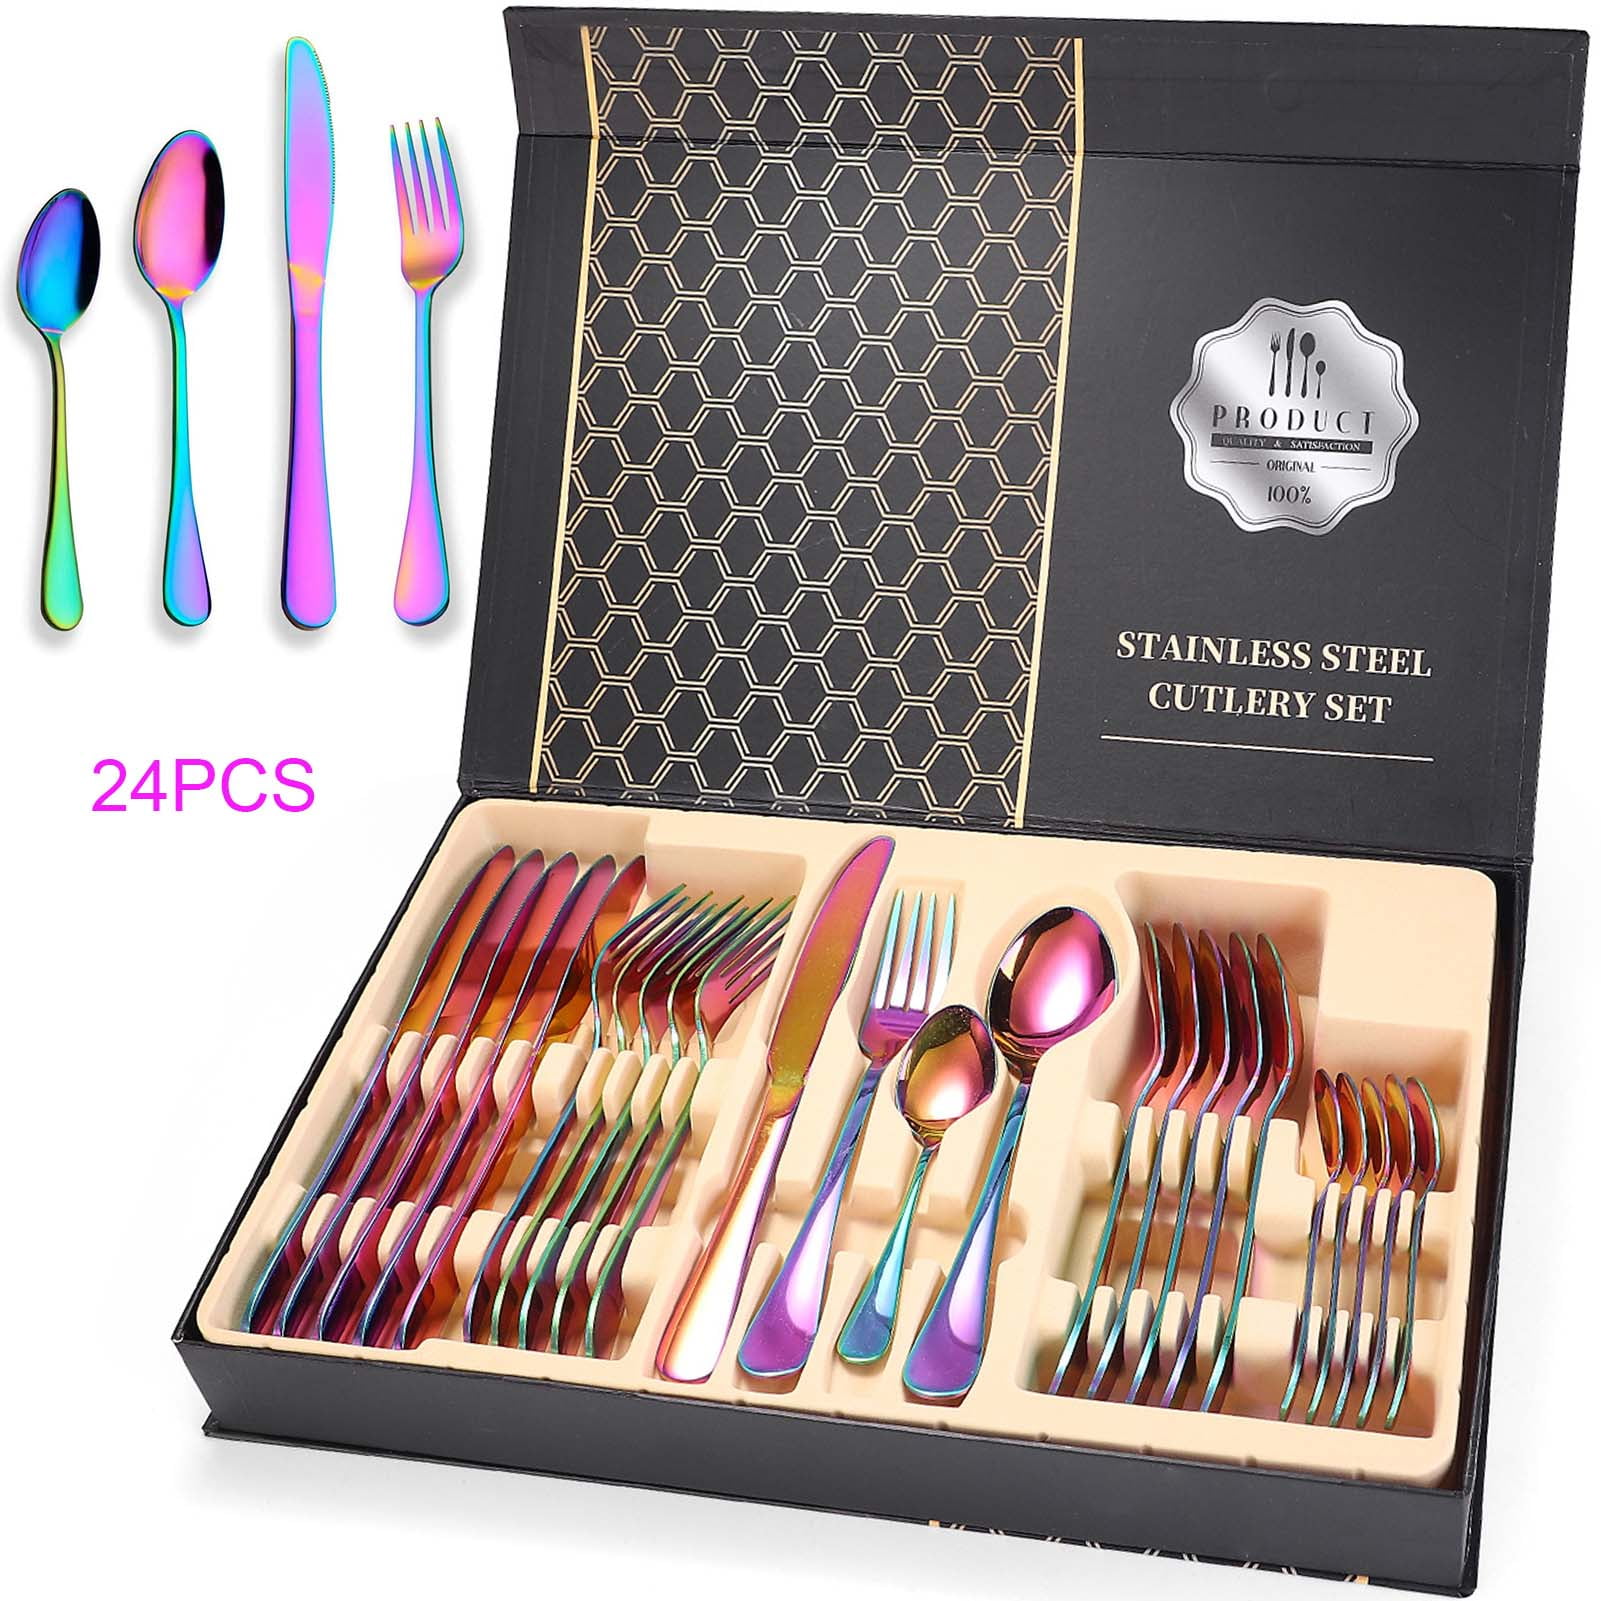 4 PCS/SET Rainbow Silverware Stainless Steel Cutlery Set Dinnerware Set Colorful 